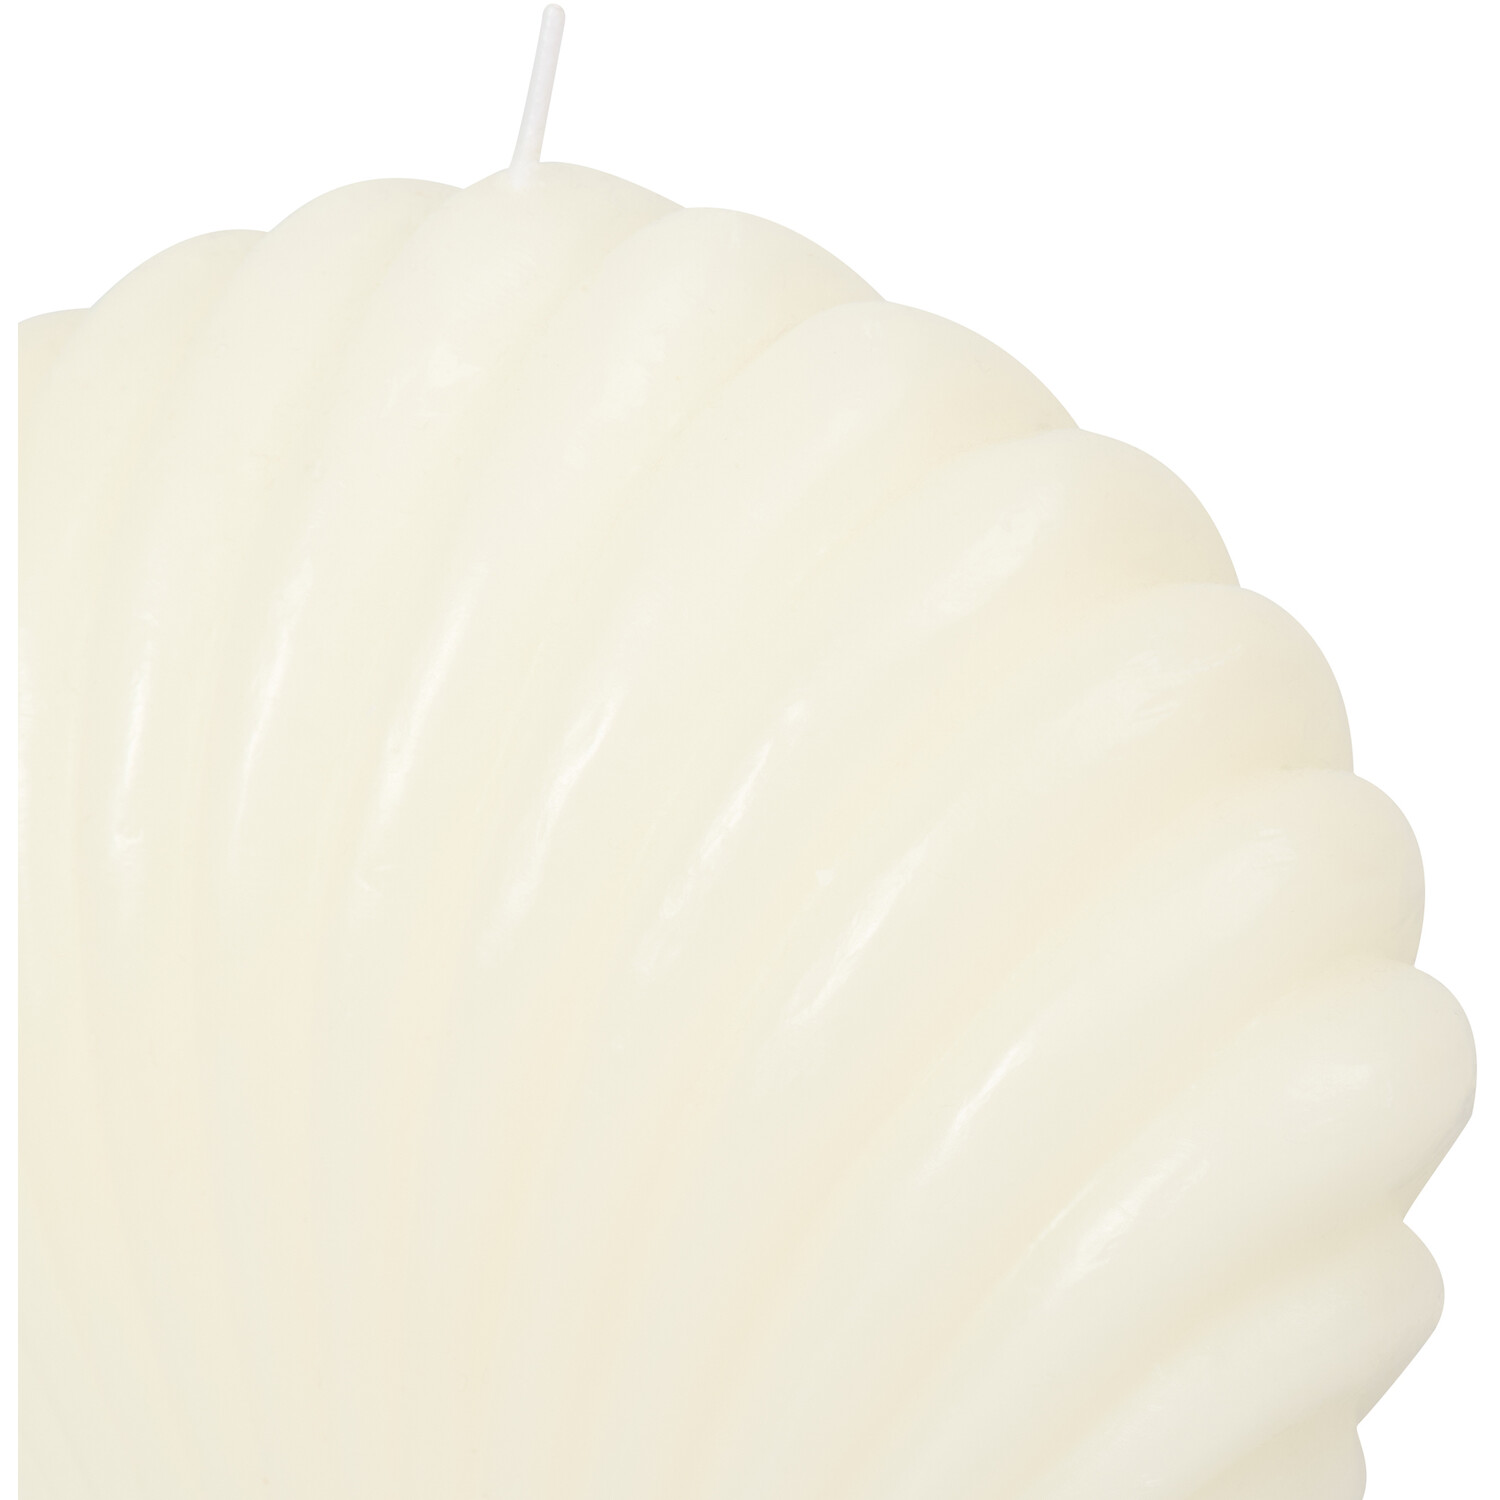 Shell Shaped Candle - White Image 3